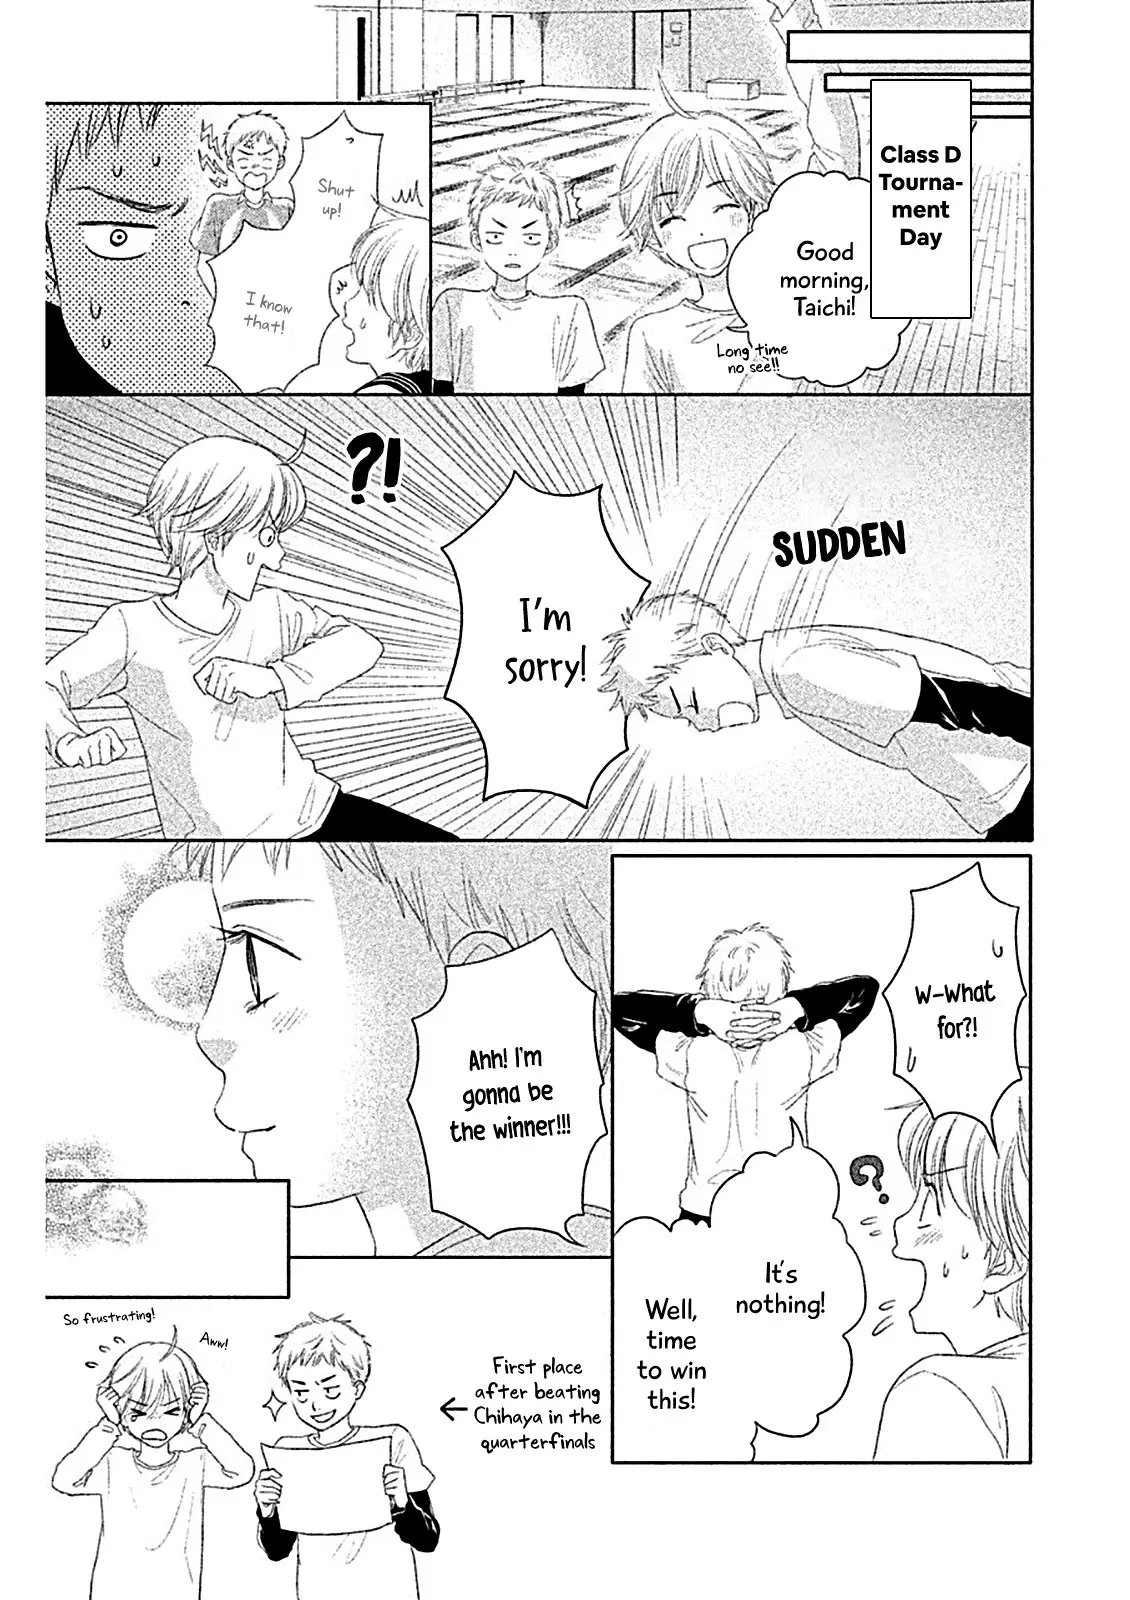 Chihayafuru: Middle School Arc - 4 page 26